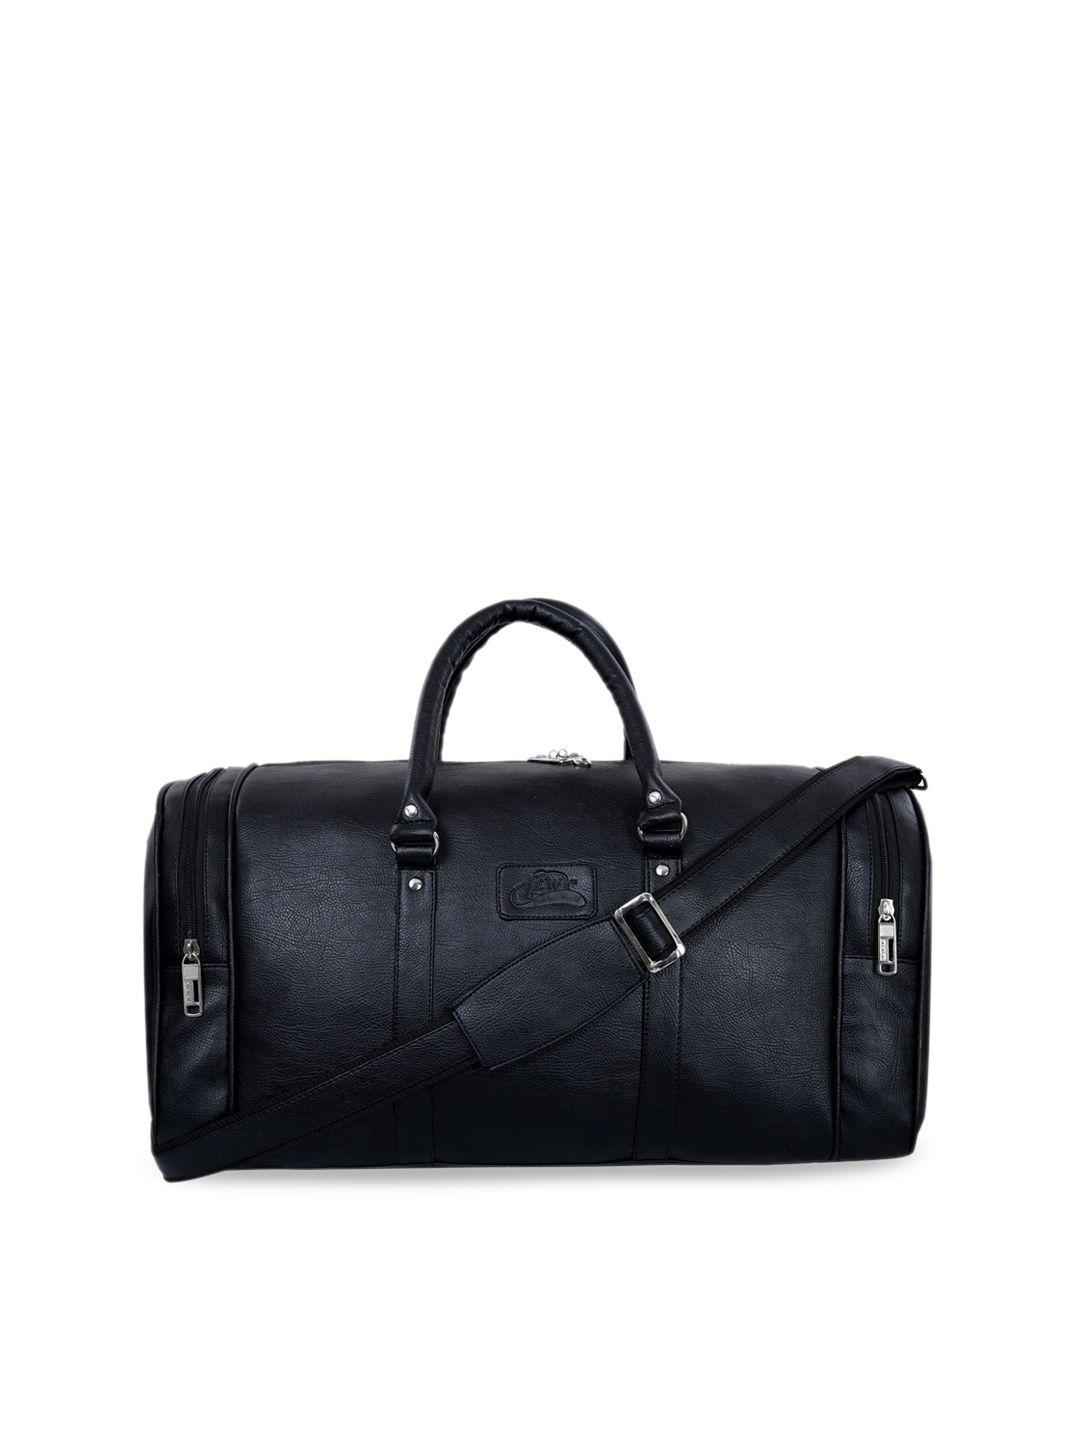 leather-world-unisex-black-solid-large-duffel-bag